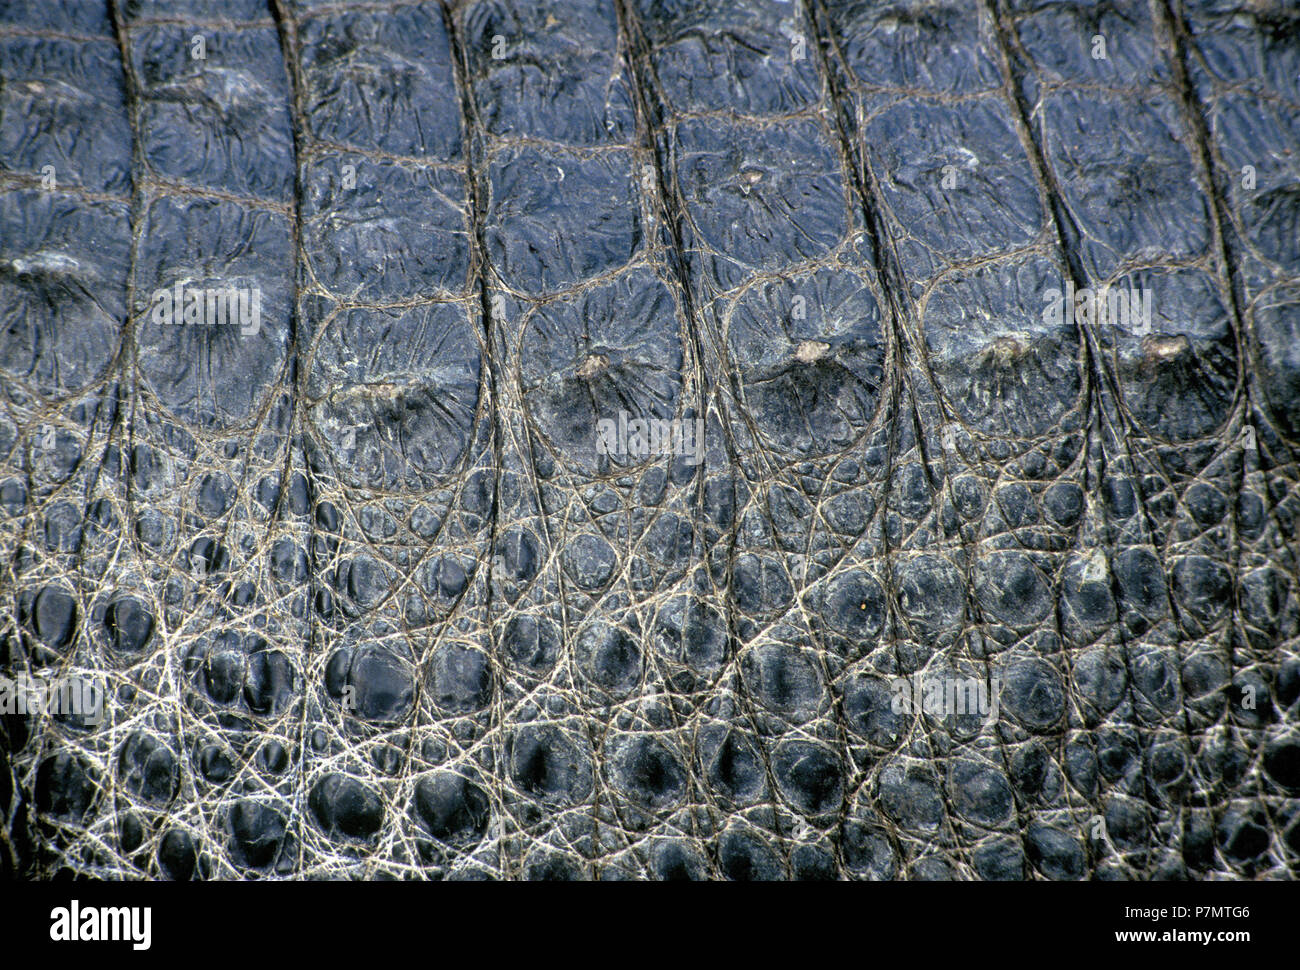 Skin of American Alligator (Alligator mississippiensis) Stock Photo